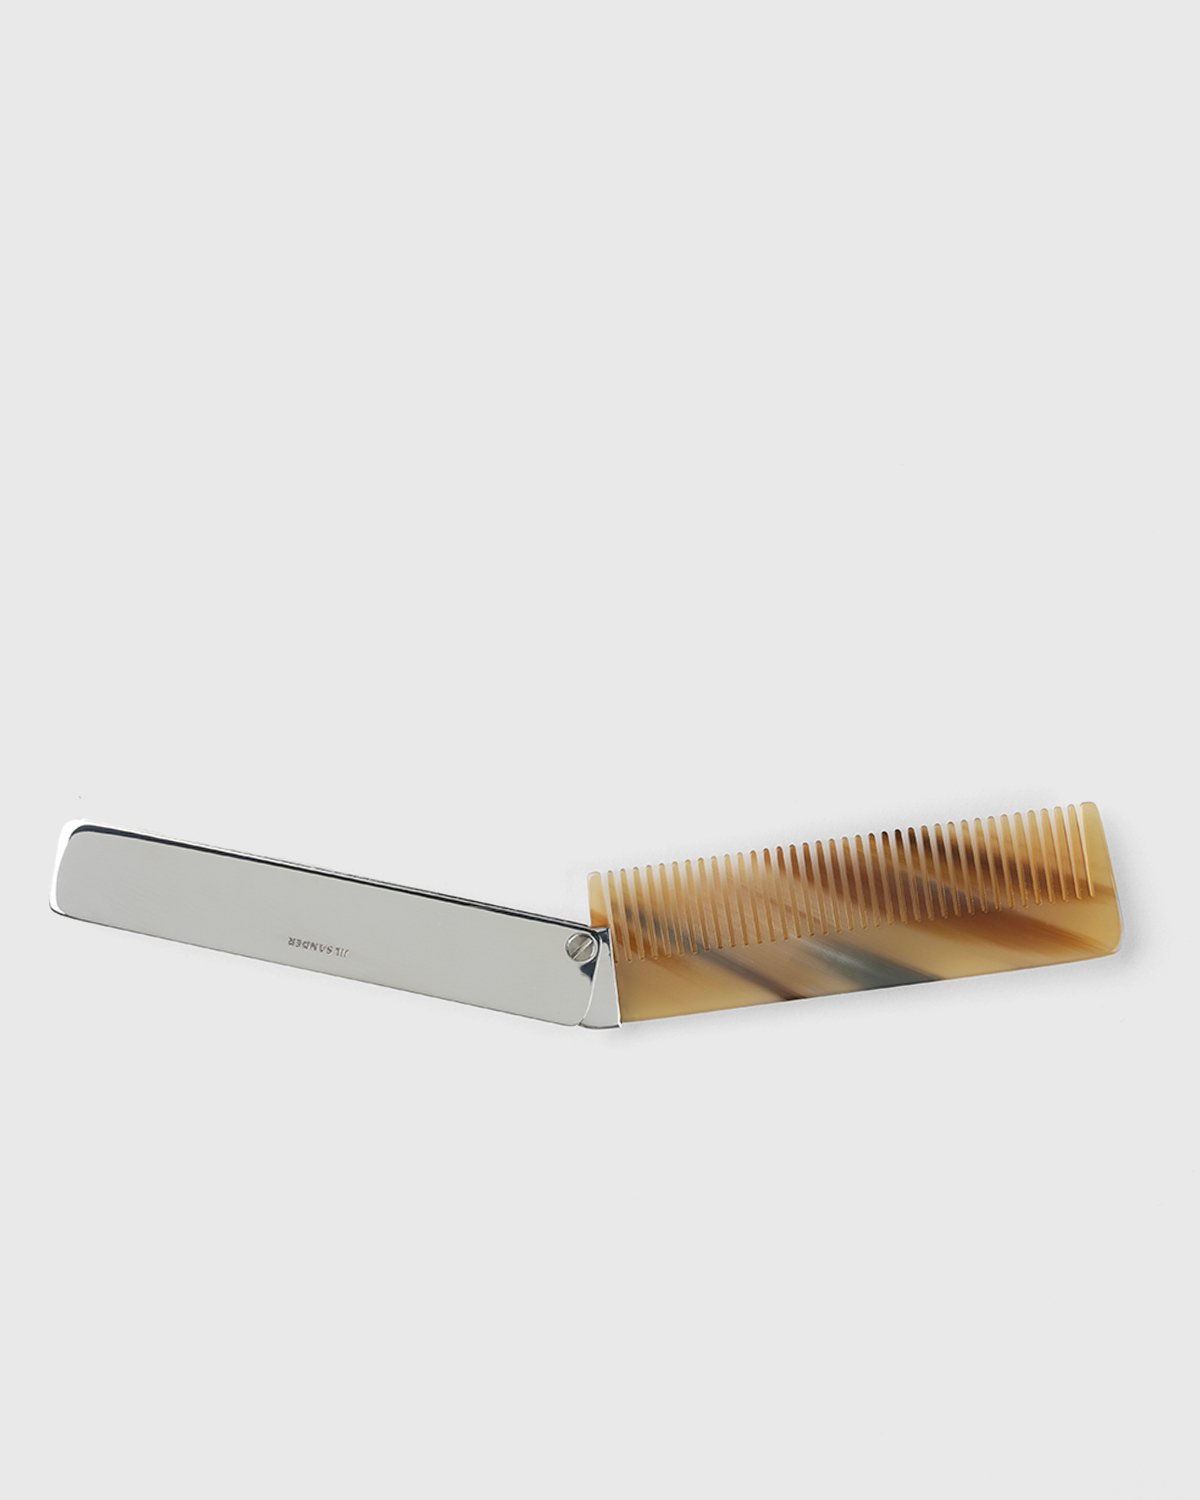 Jil Sander - Pocket Comb Case Silver - Lifestyle - Silver - Image 2